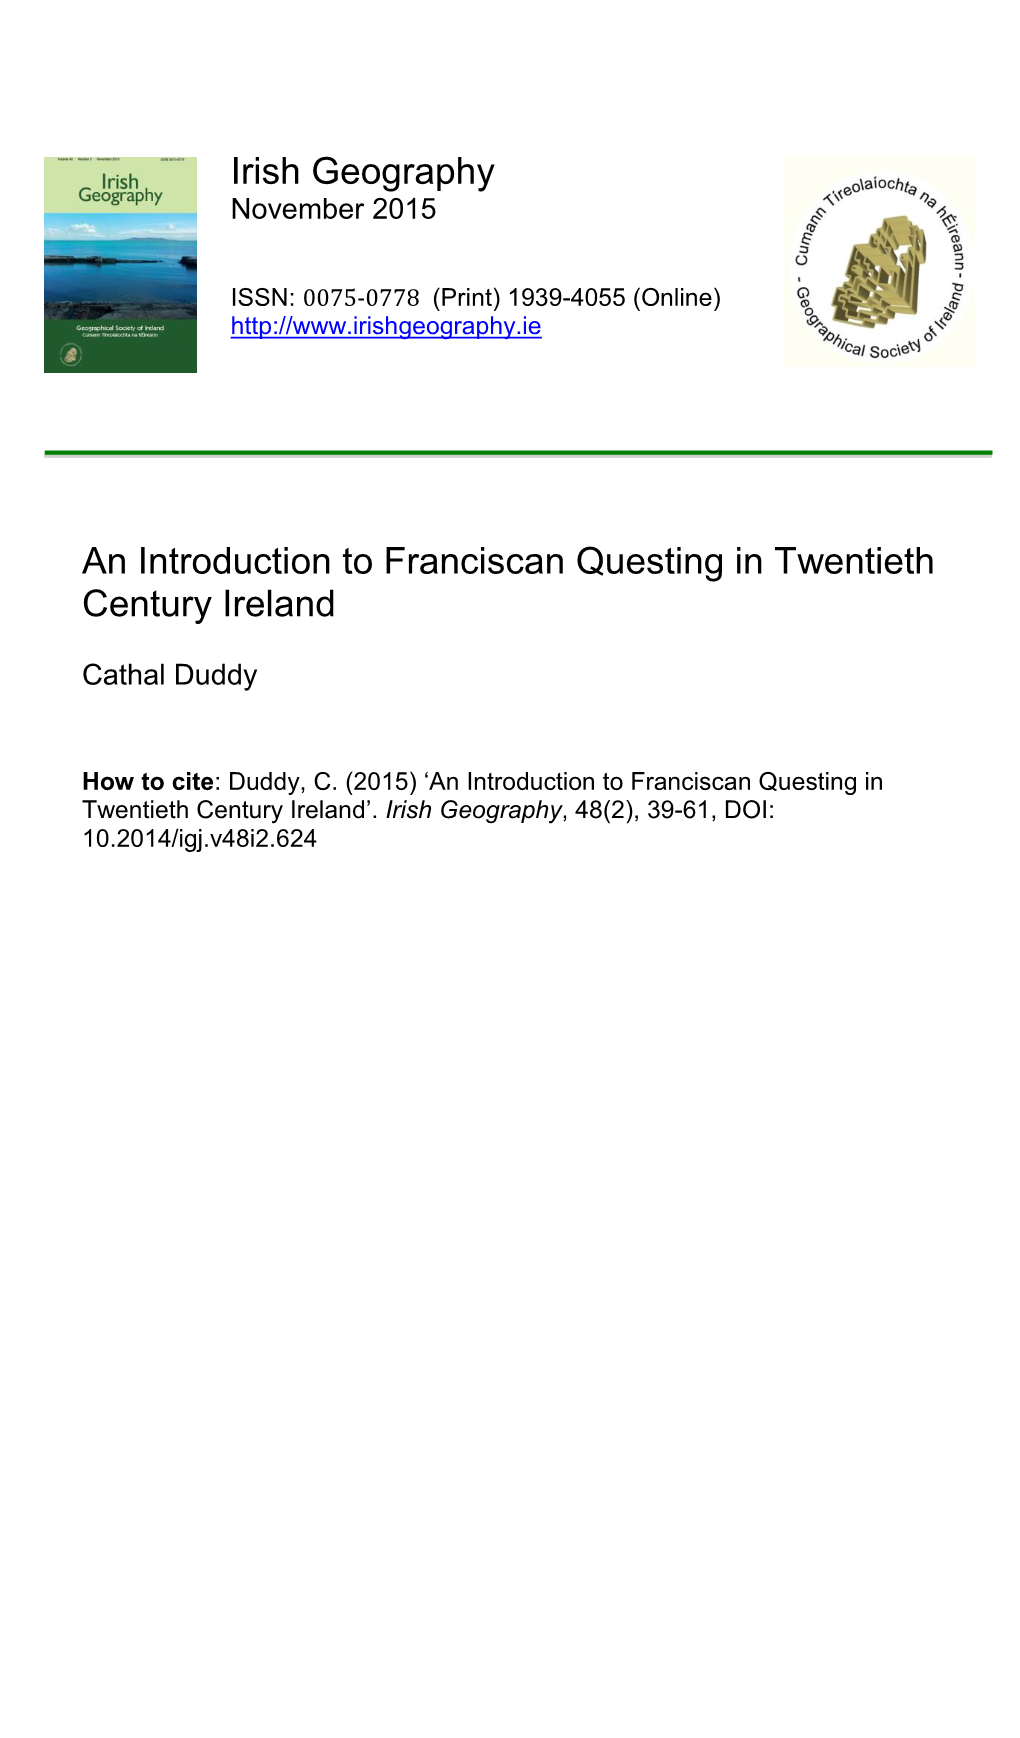 Irish Geography an Introduction to Franciscan Questing in Twentieth Century Ireland